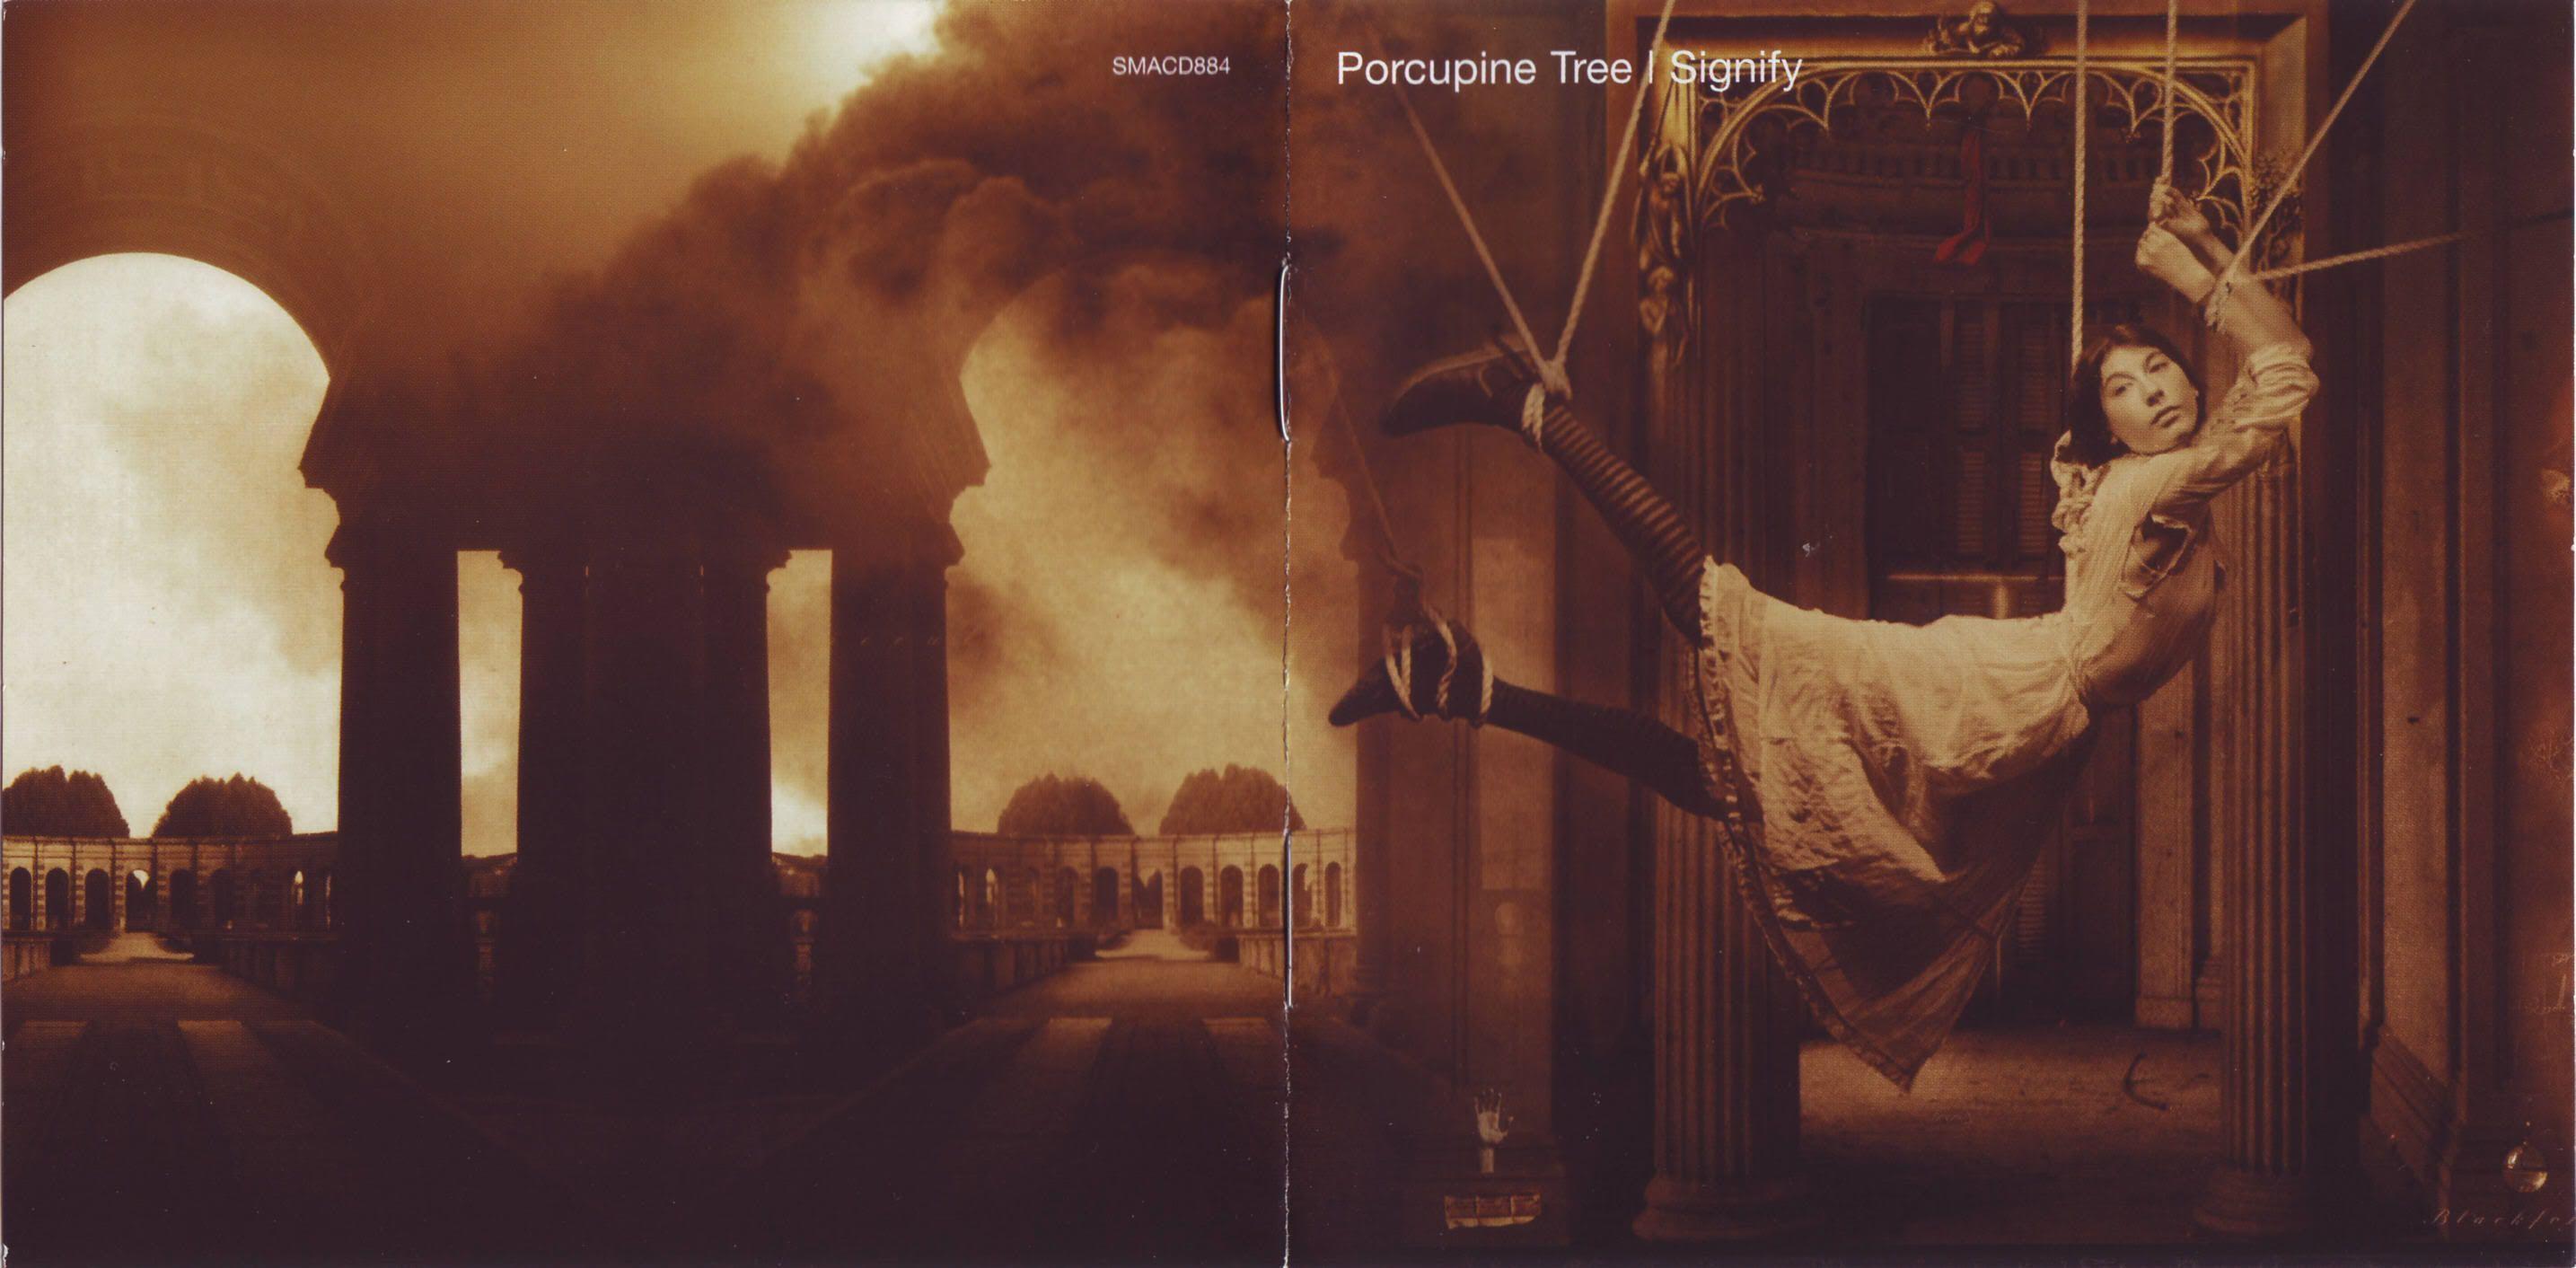 image For > Porcupine Tree Album